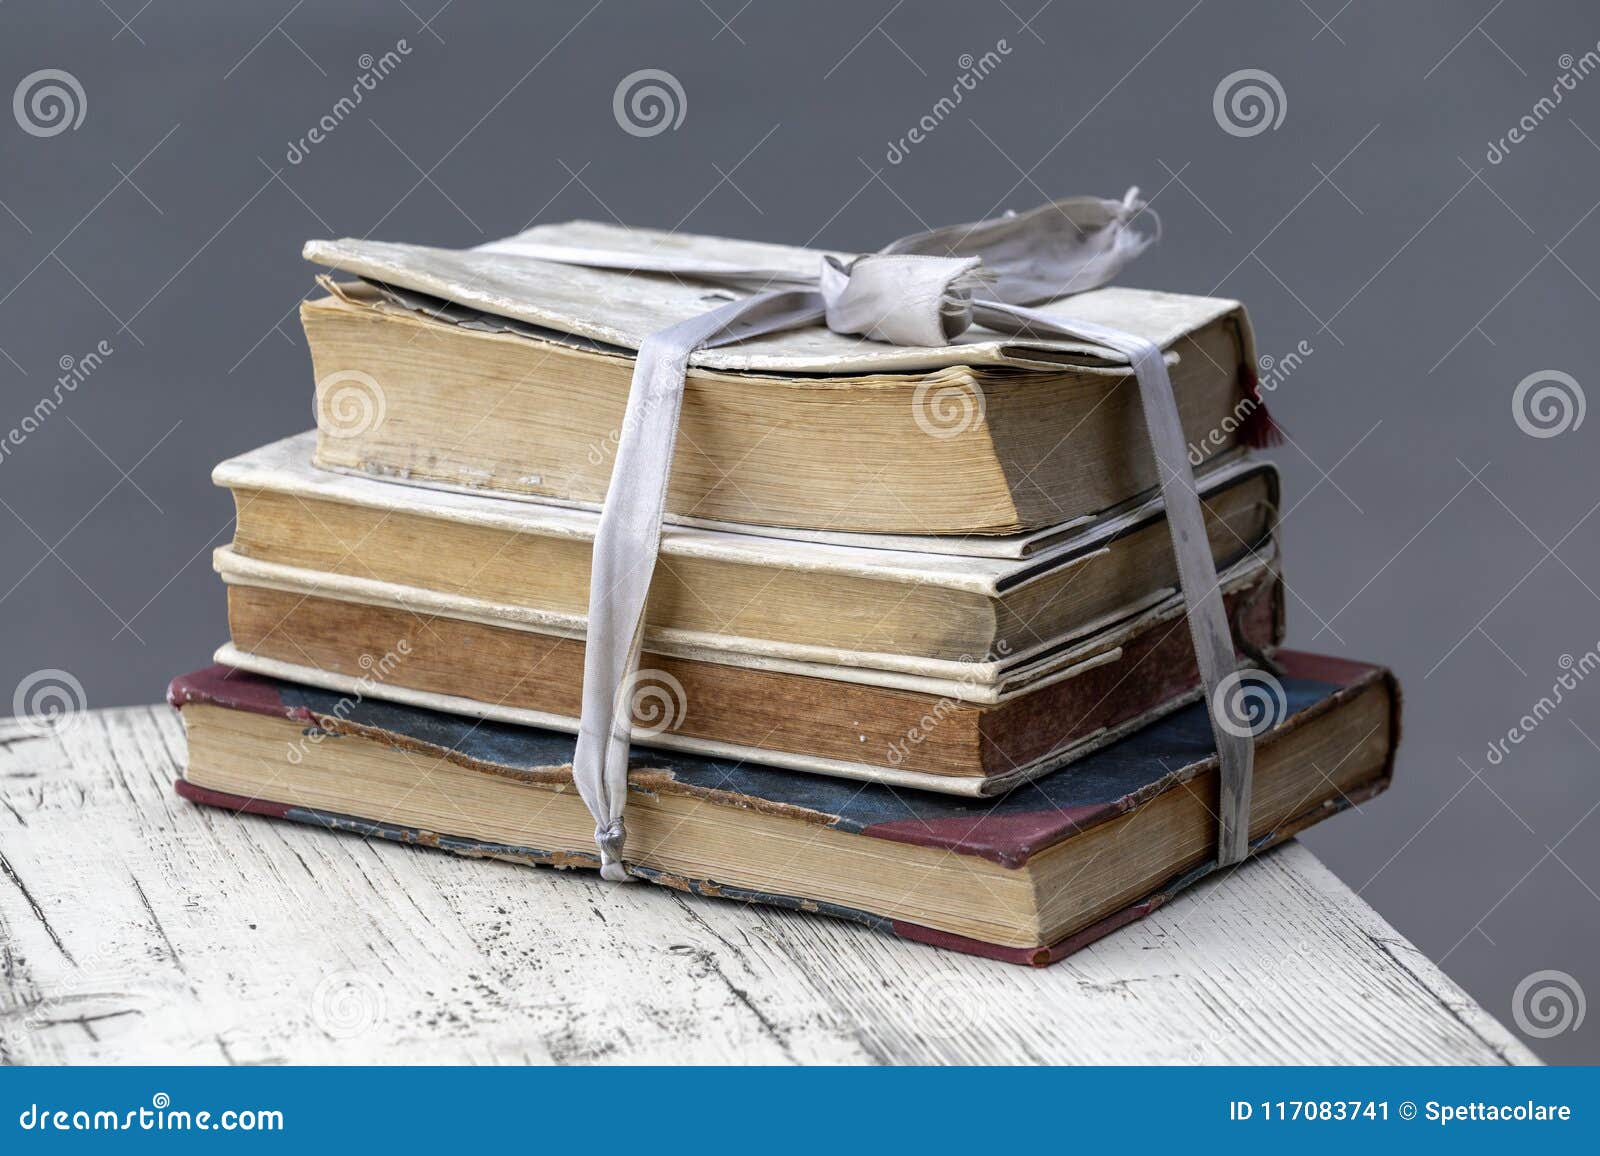 Worn book. Книги связанные лентой. Стопки книги связанные веревкой. Книги со связанными страницами. Stack of New books Tied.